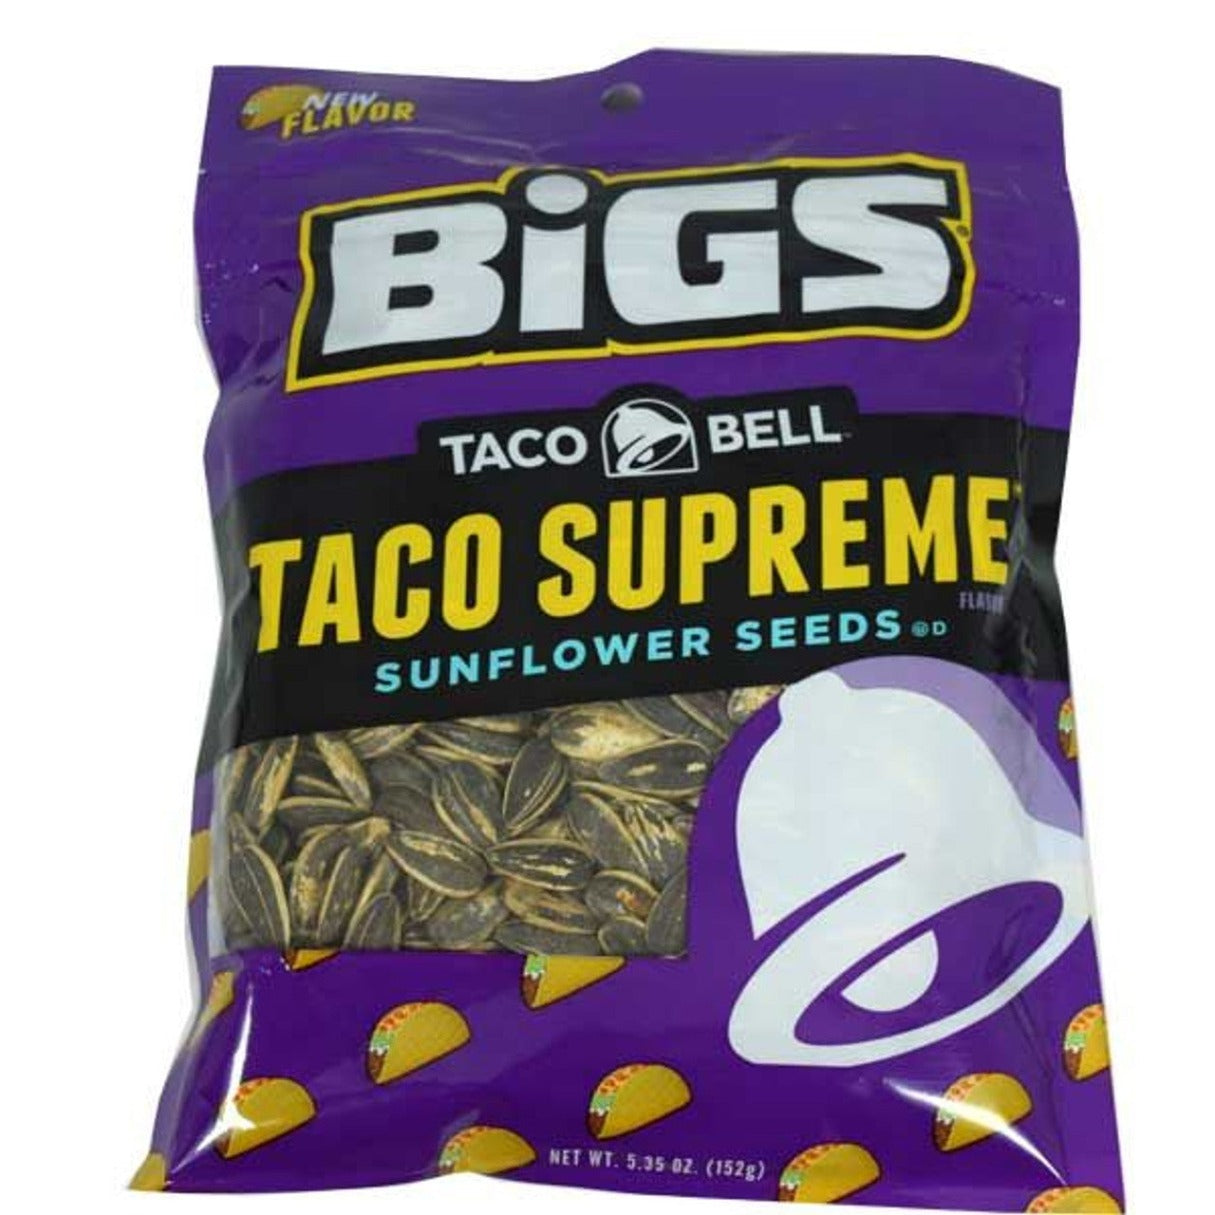 Bigs Taco Bell Supreme Sunflower Seeds 5.35oz - 12ct